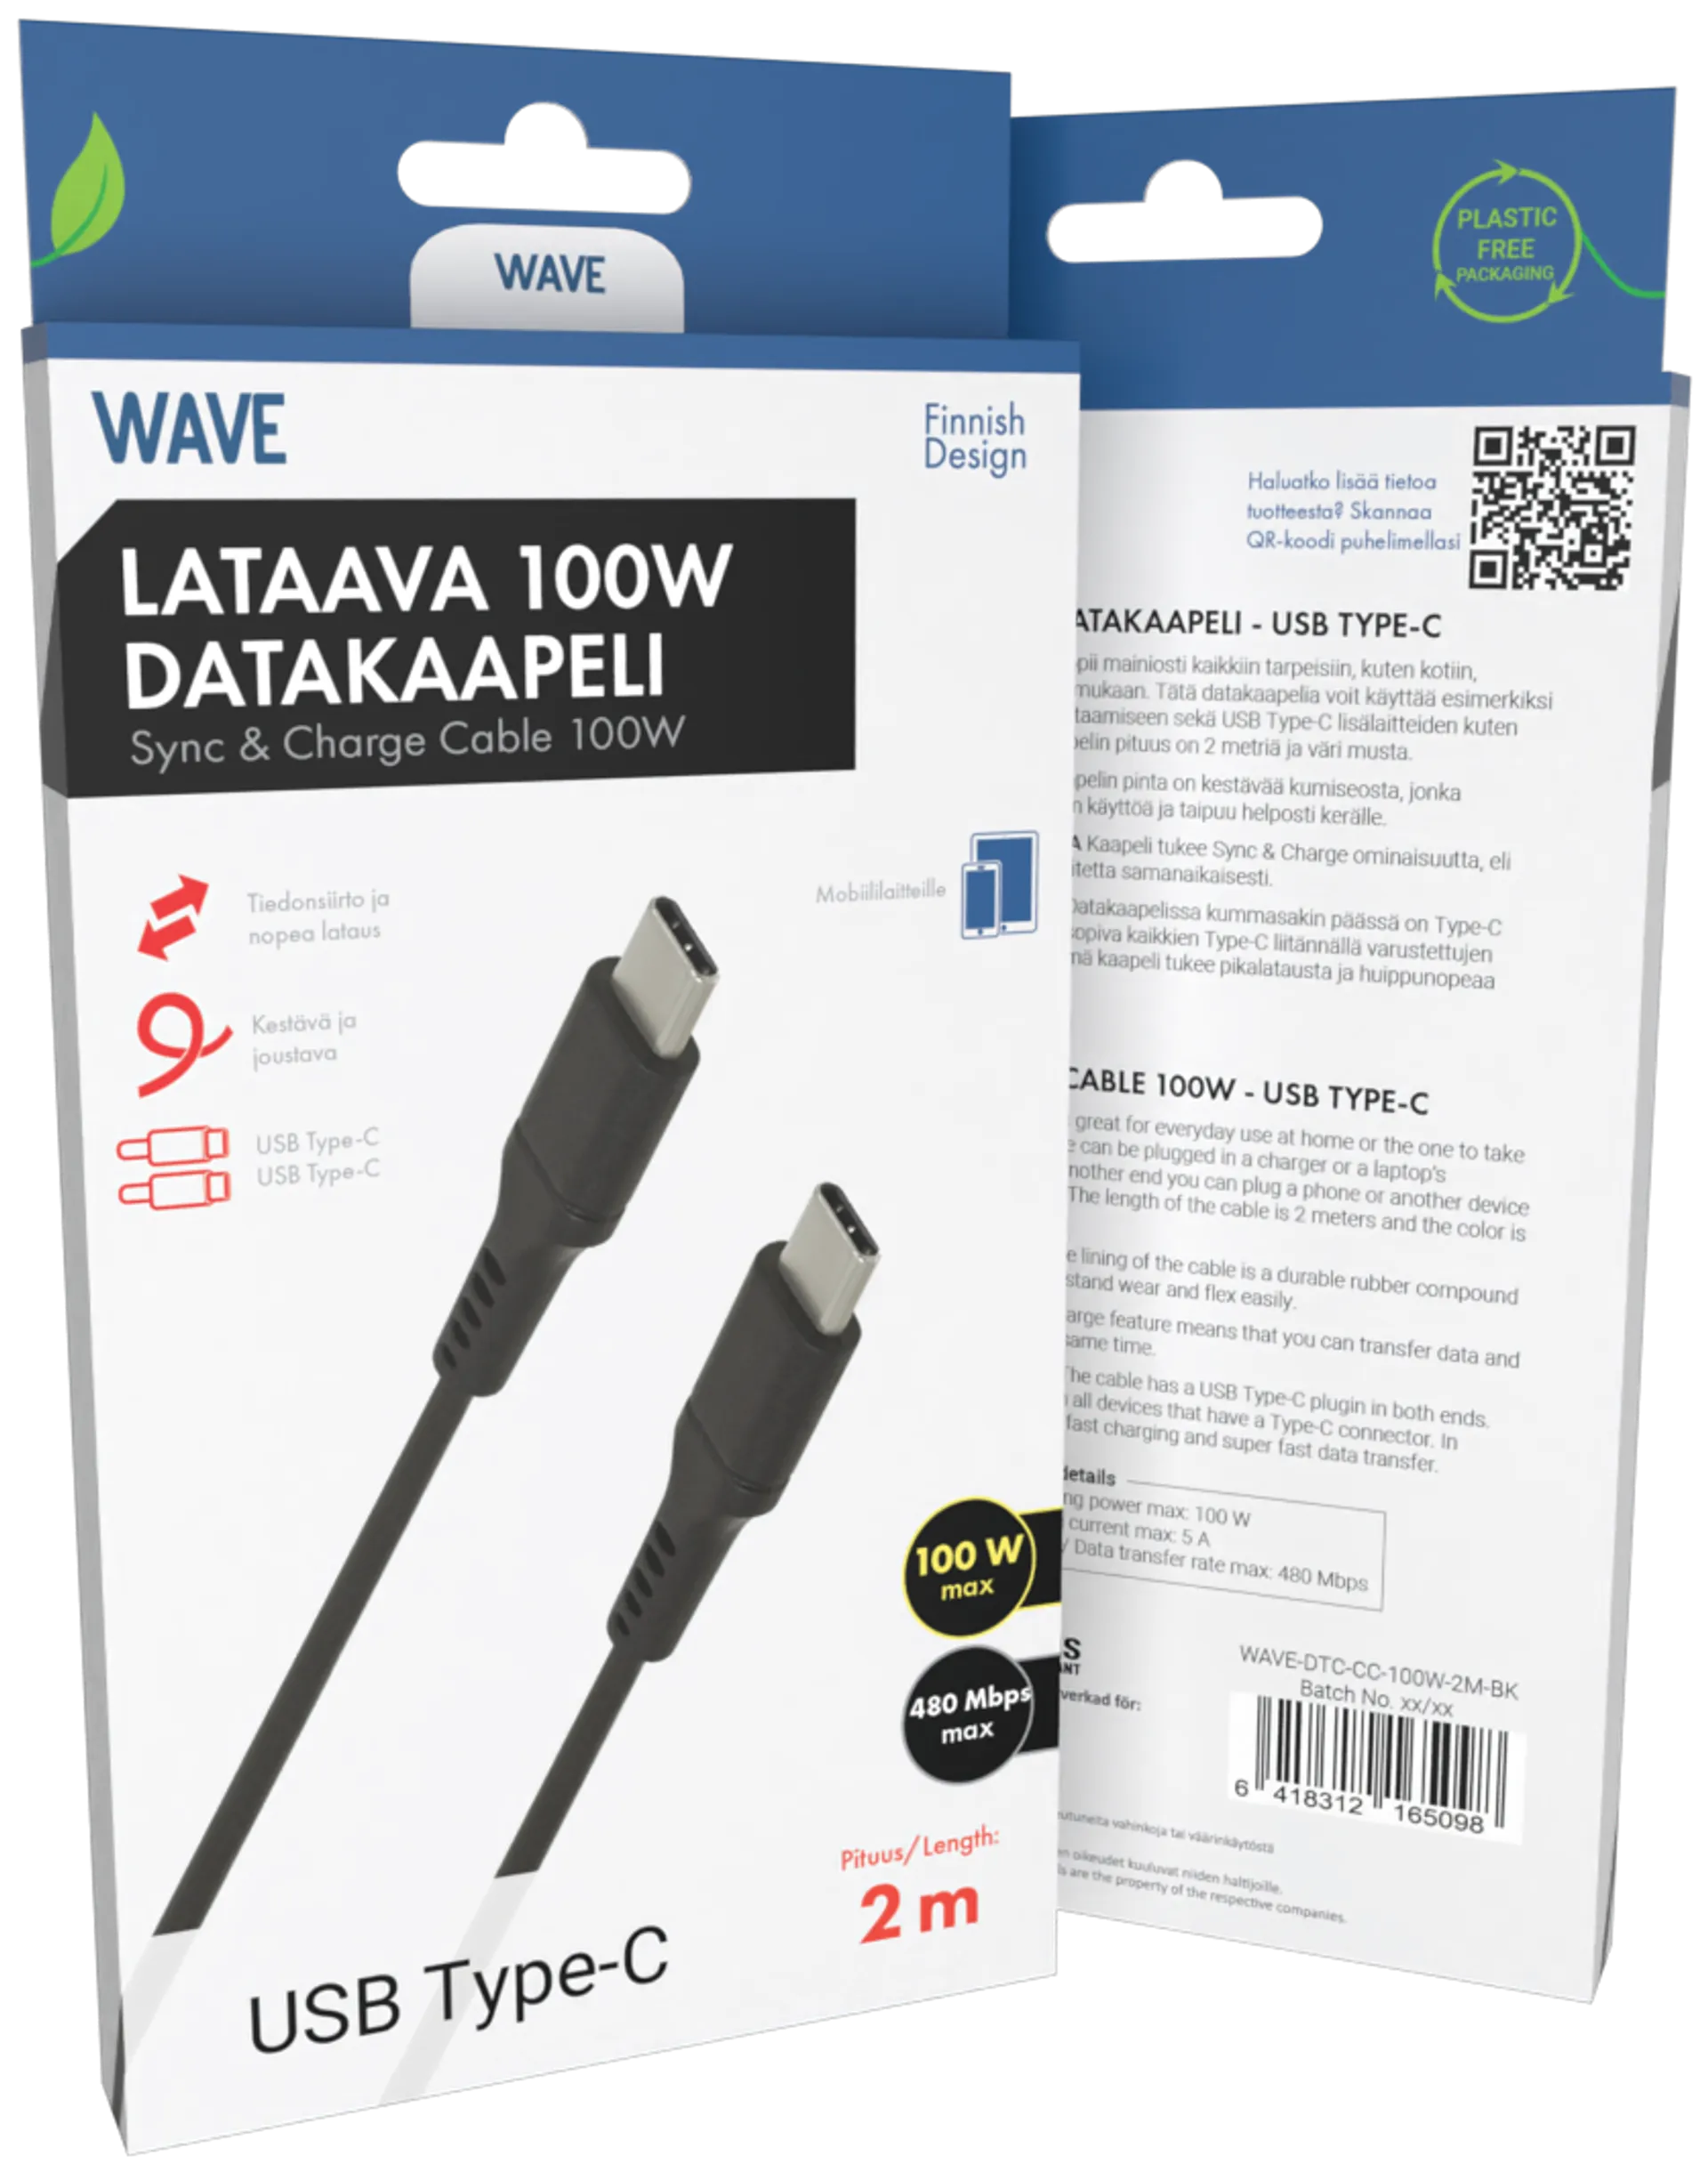 Wave 100W Datakaapeli, USB Type-C -> USB Type-C (480 Mbps), 2m, Musta - 1